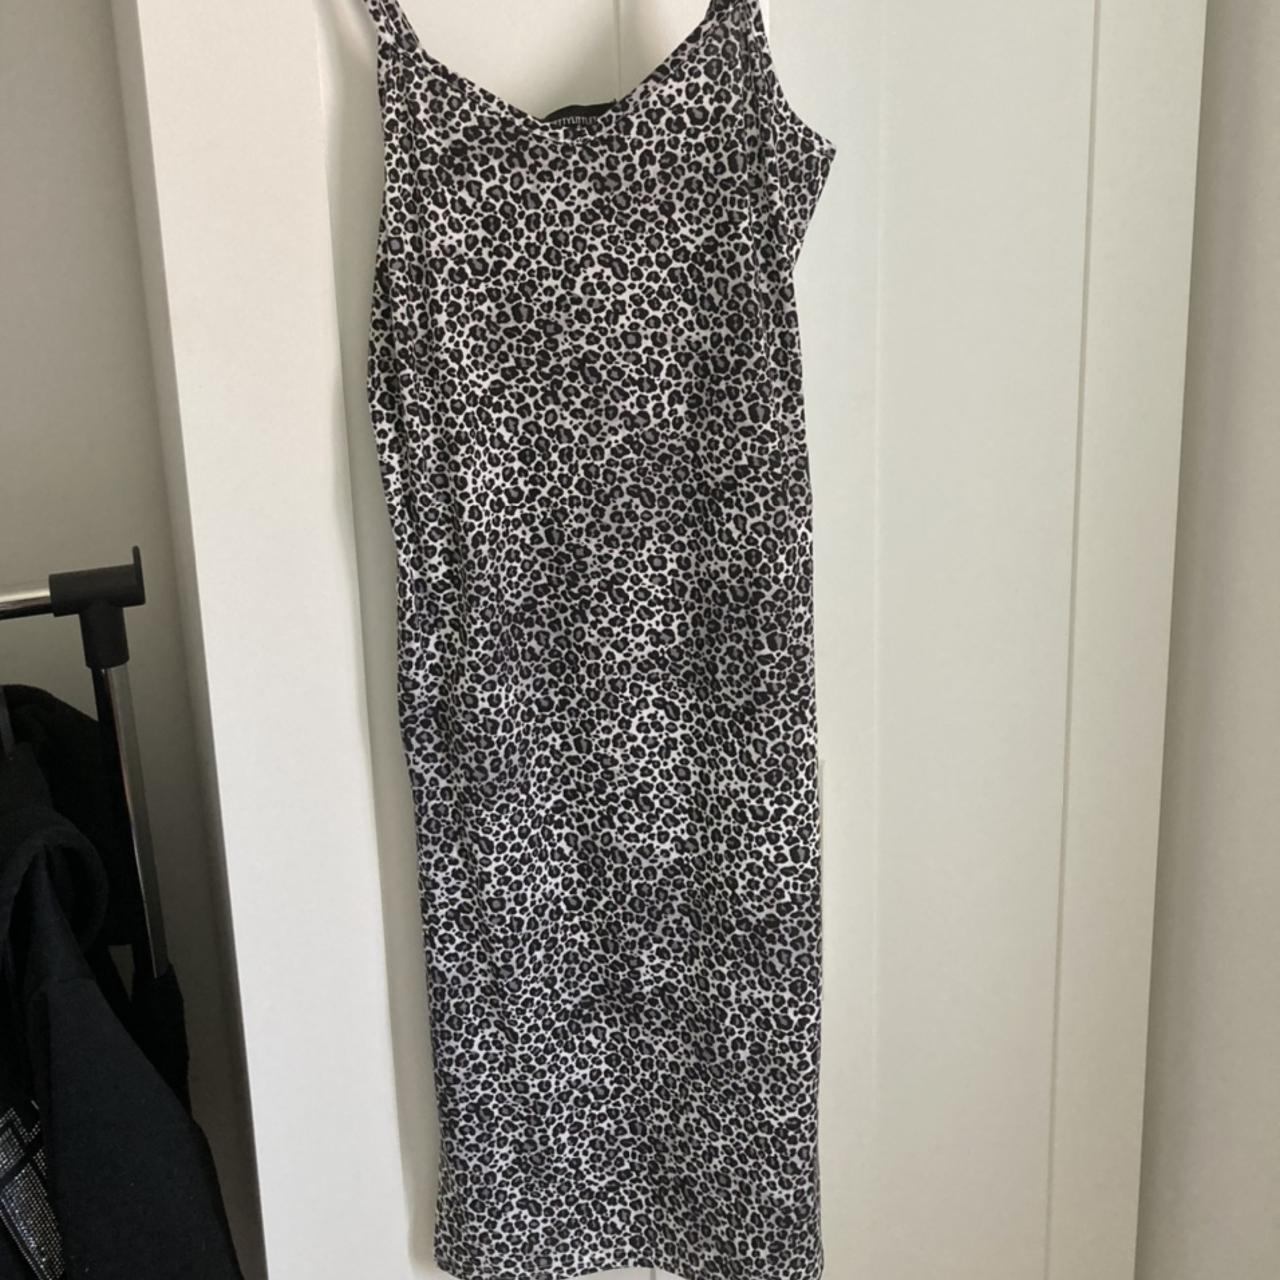 Product Image 1 - cheetah print slip dress from